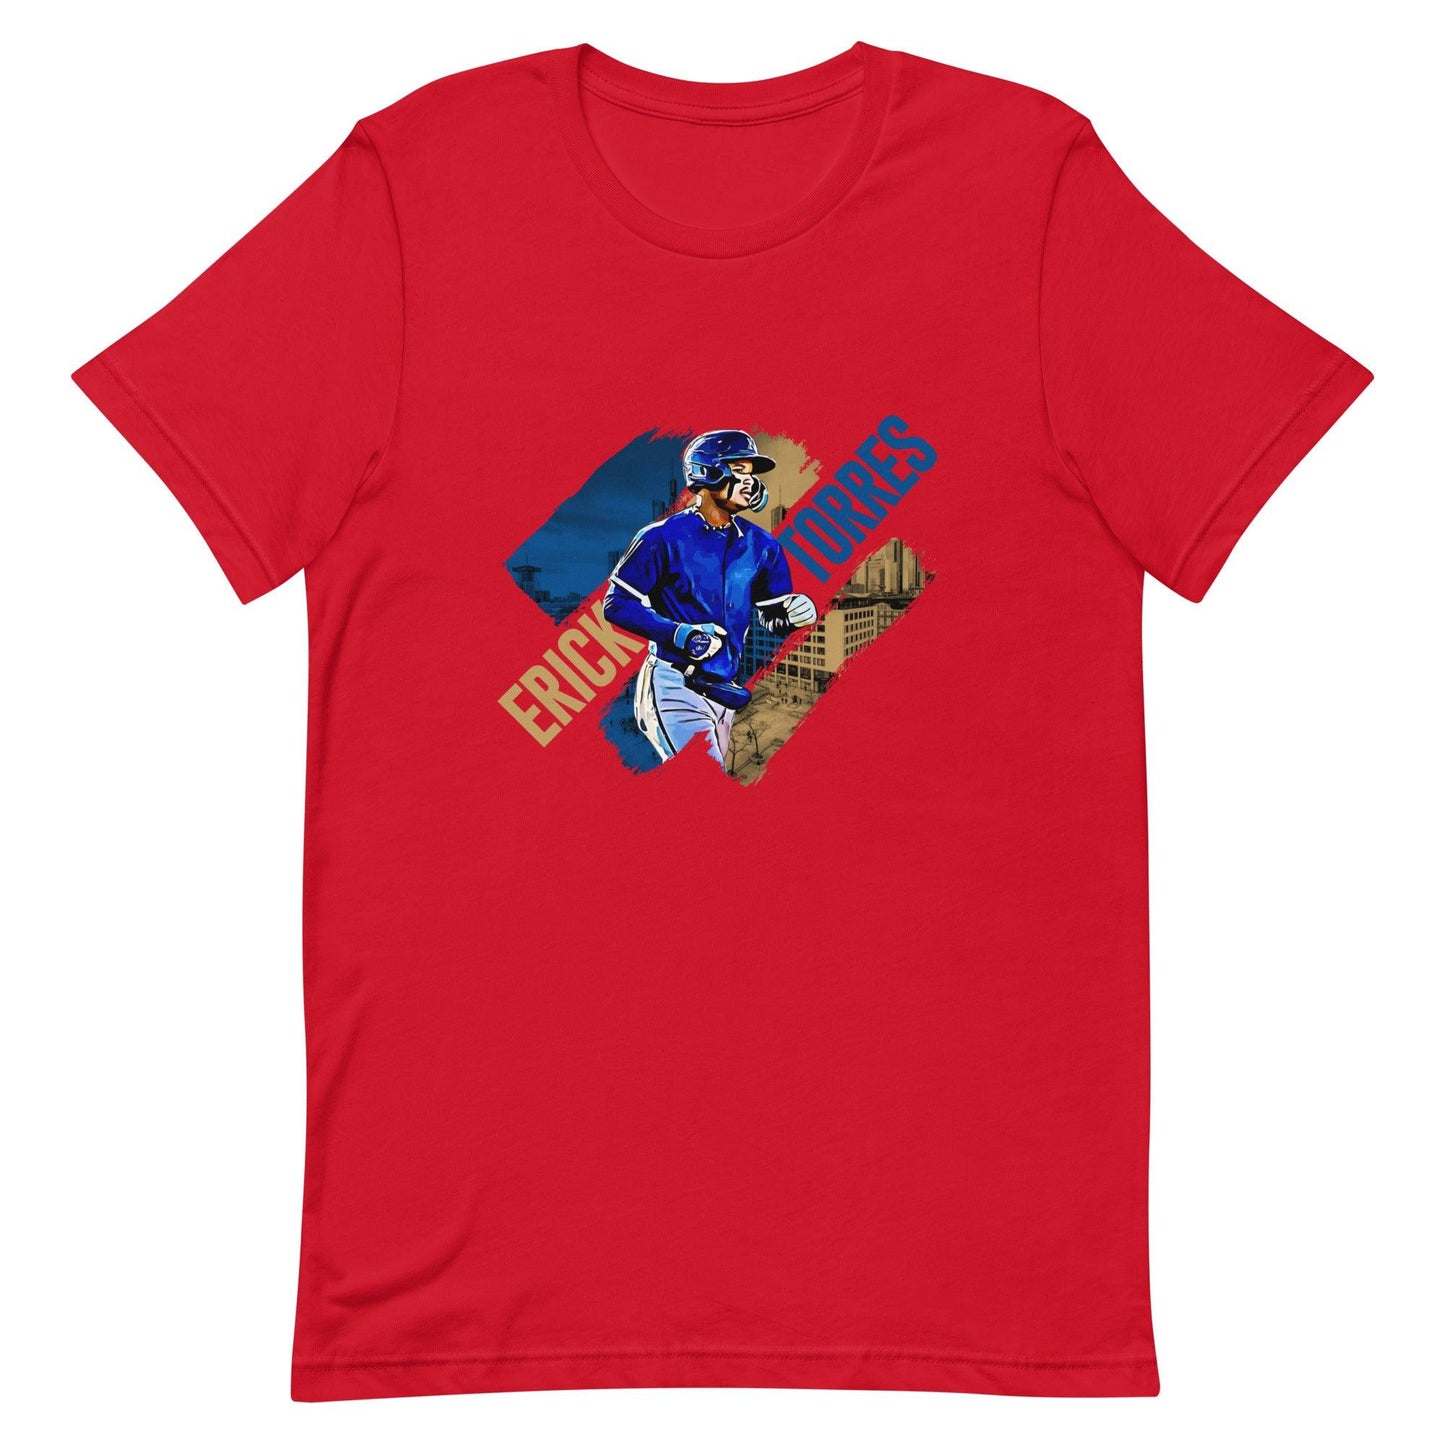 Erick Torres "Gameday" t-shirt - Fan Arch